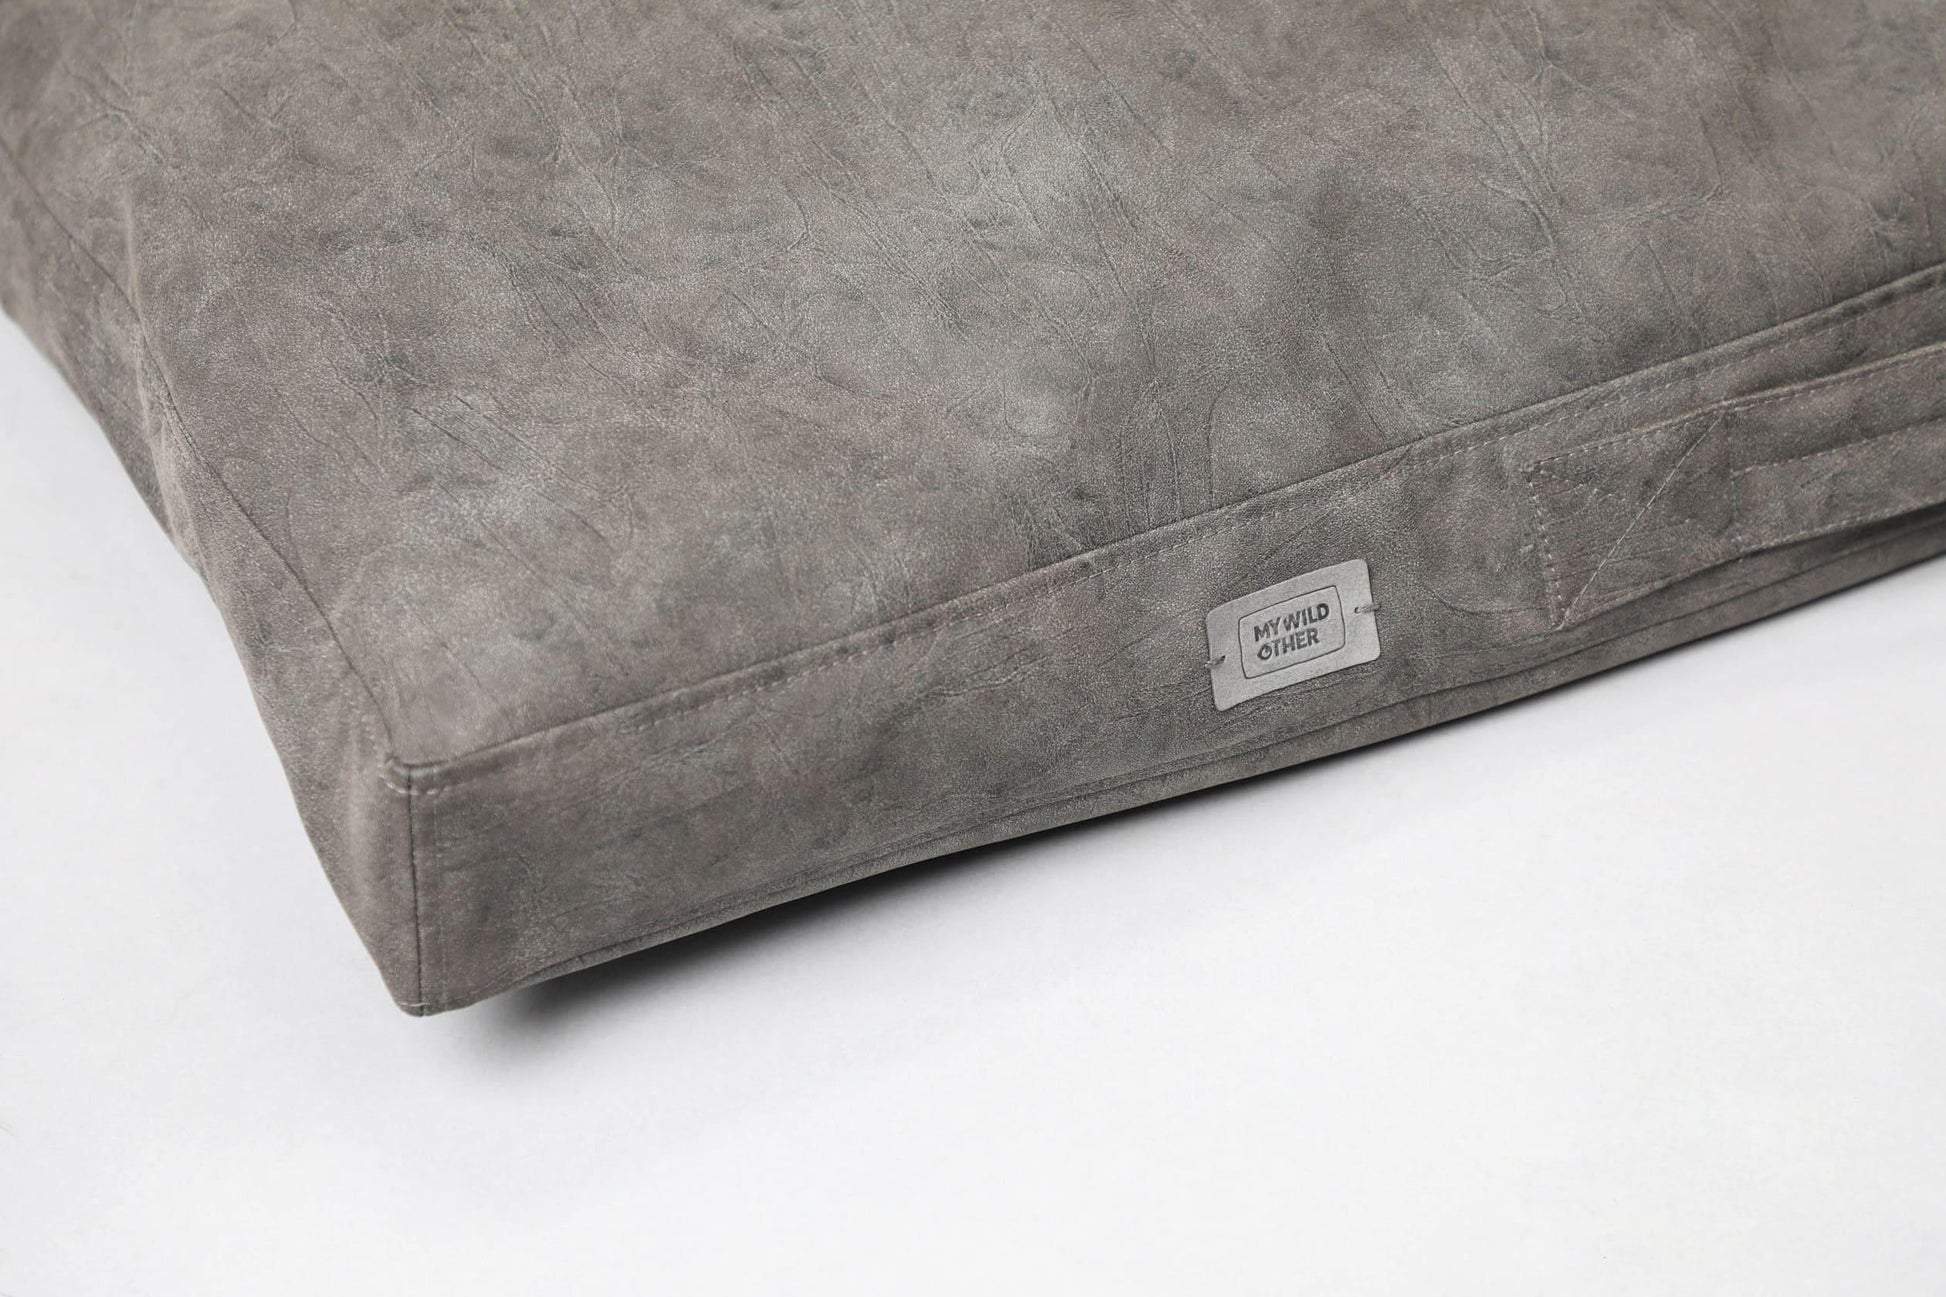 Dog cushion bed | 2-sided | Water resistant | IRON GREY - premium dog goods handmade in Europe by animalistus